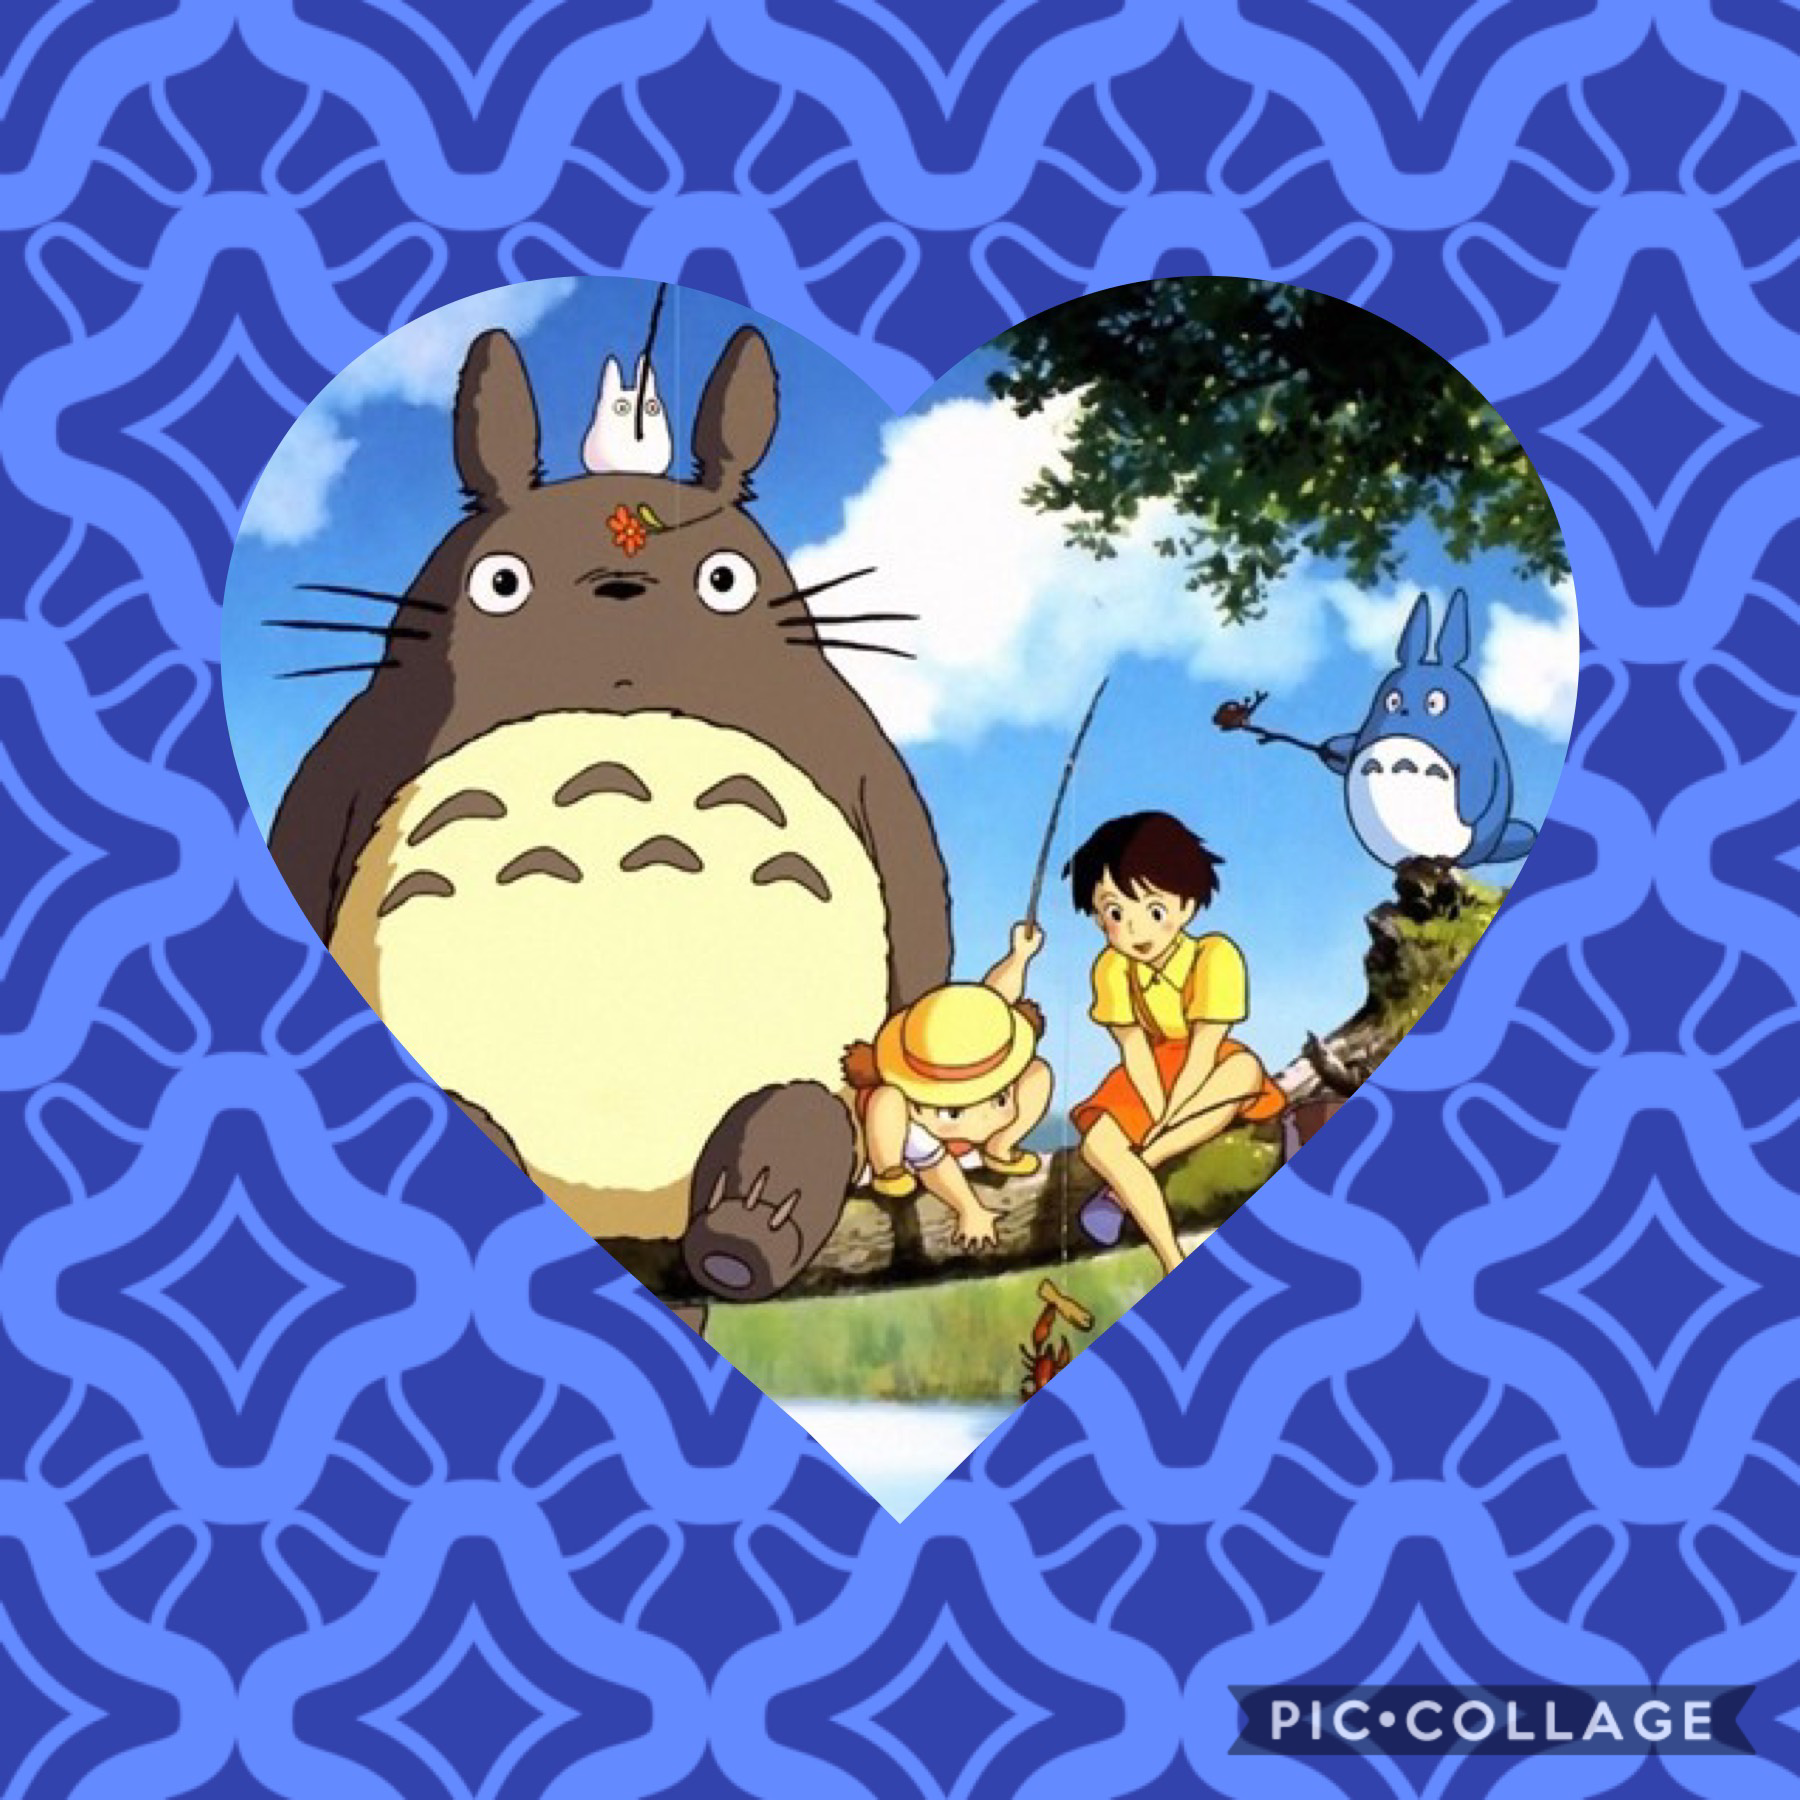 Do you guys like my neighbor Totoro?